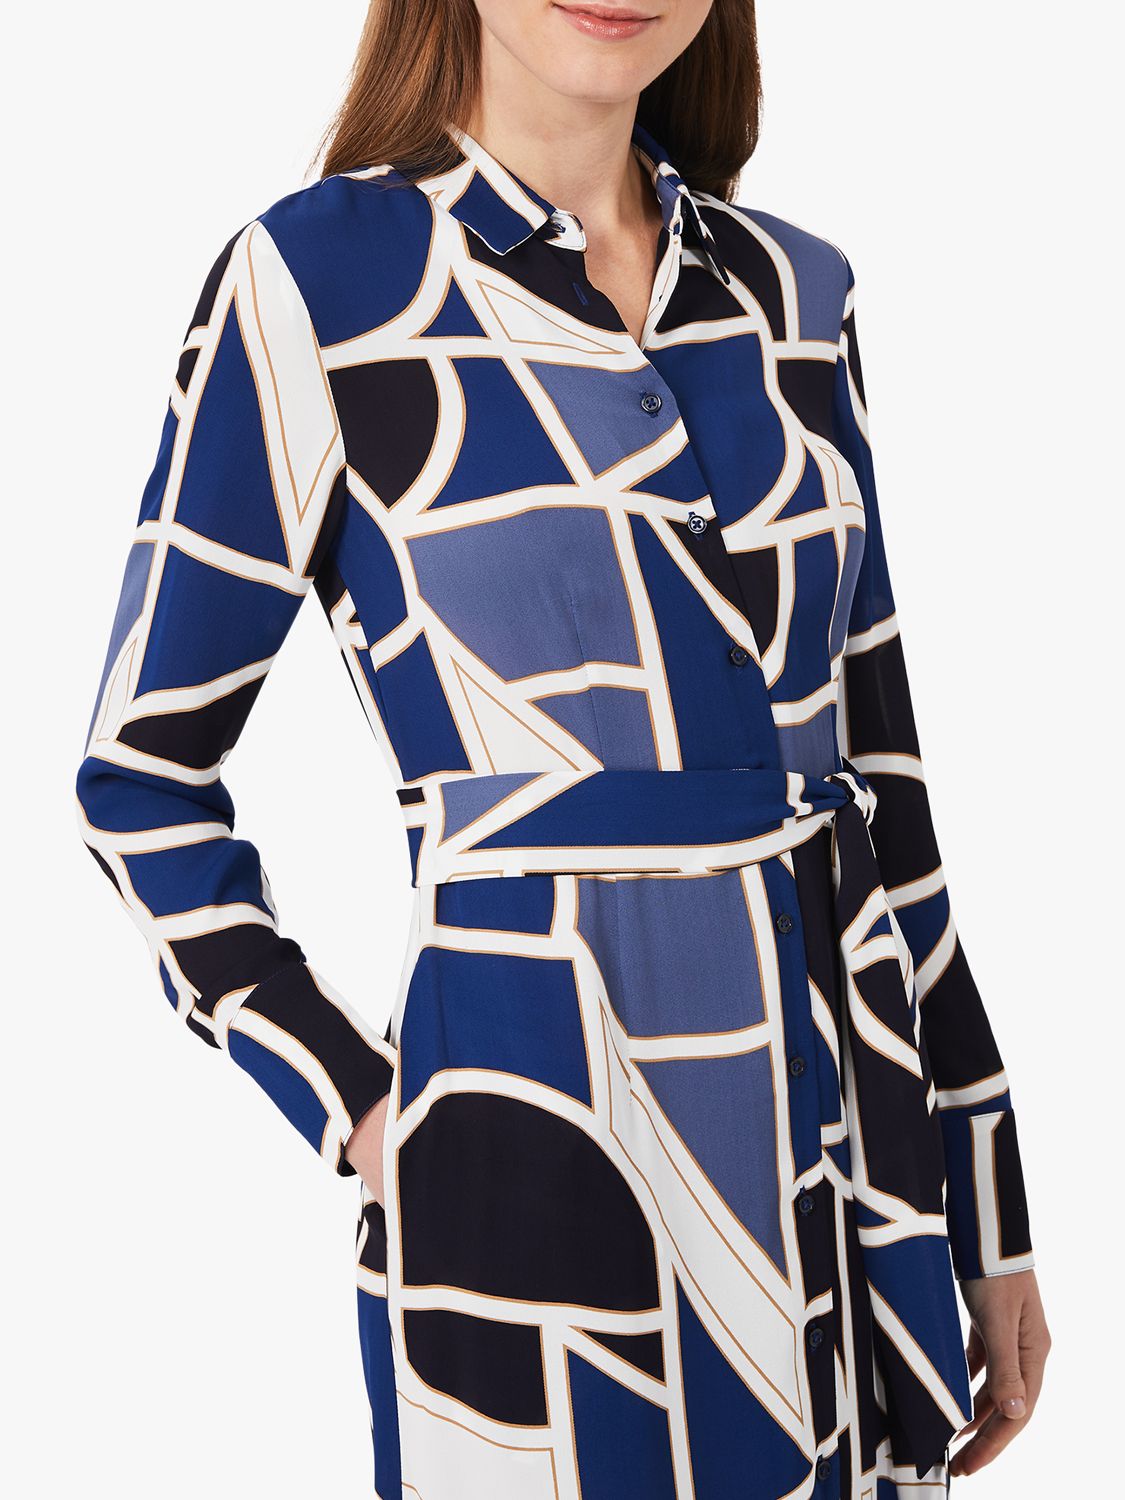 Hobbs Nadine Abstract Midi Dress, Blue/Multi at John Lewis & Partners